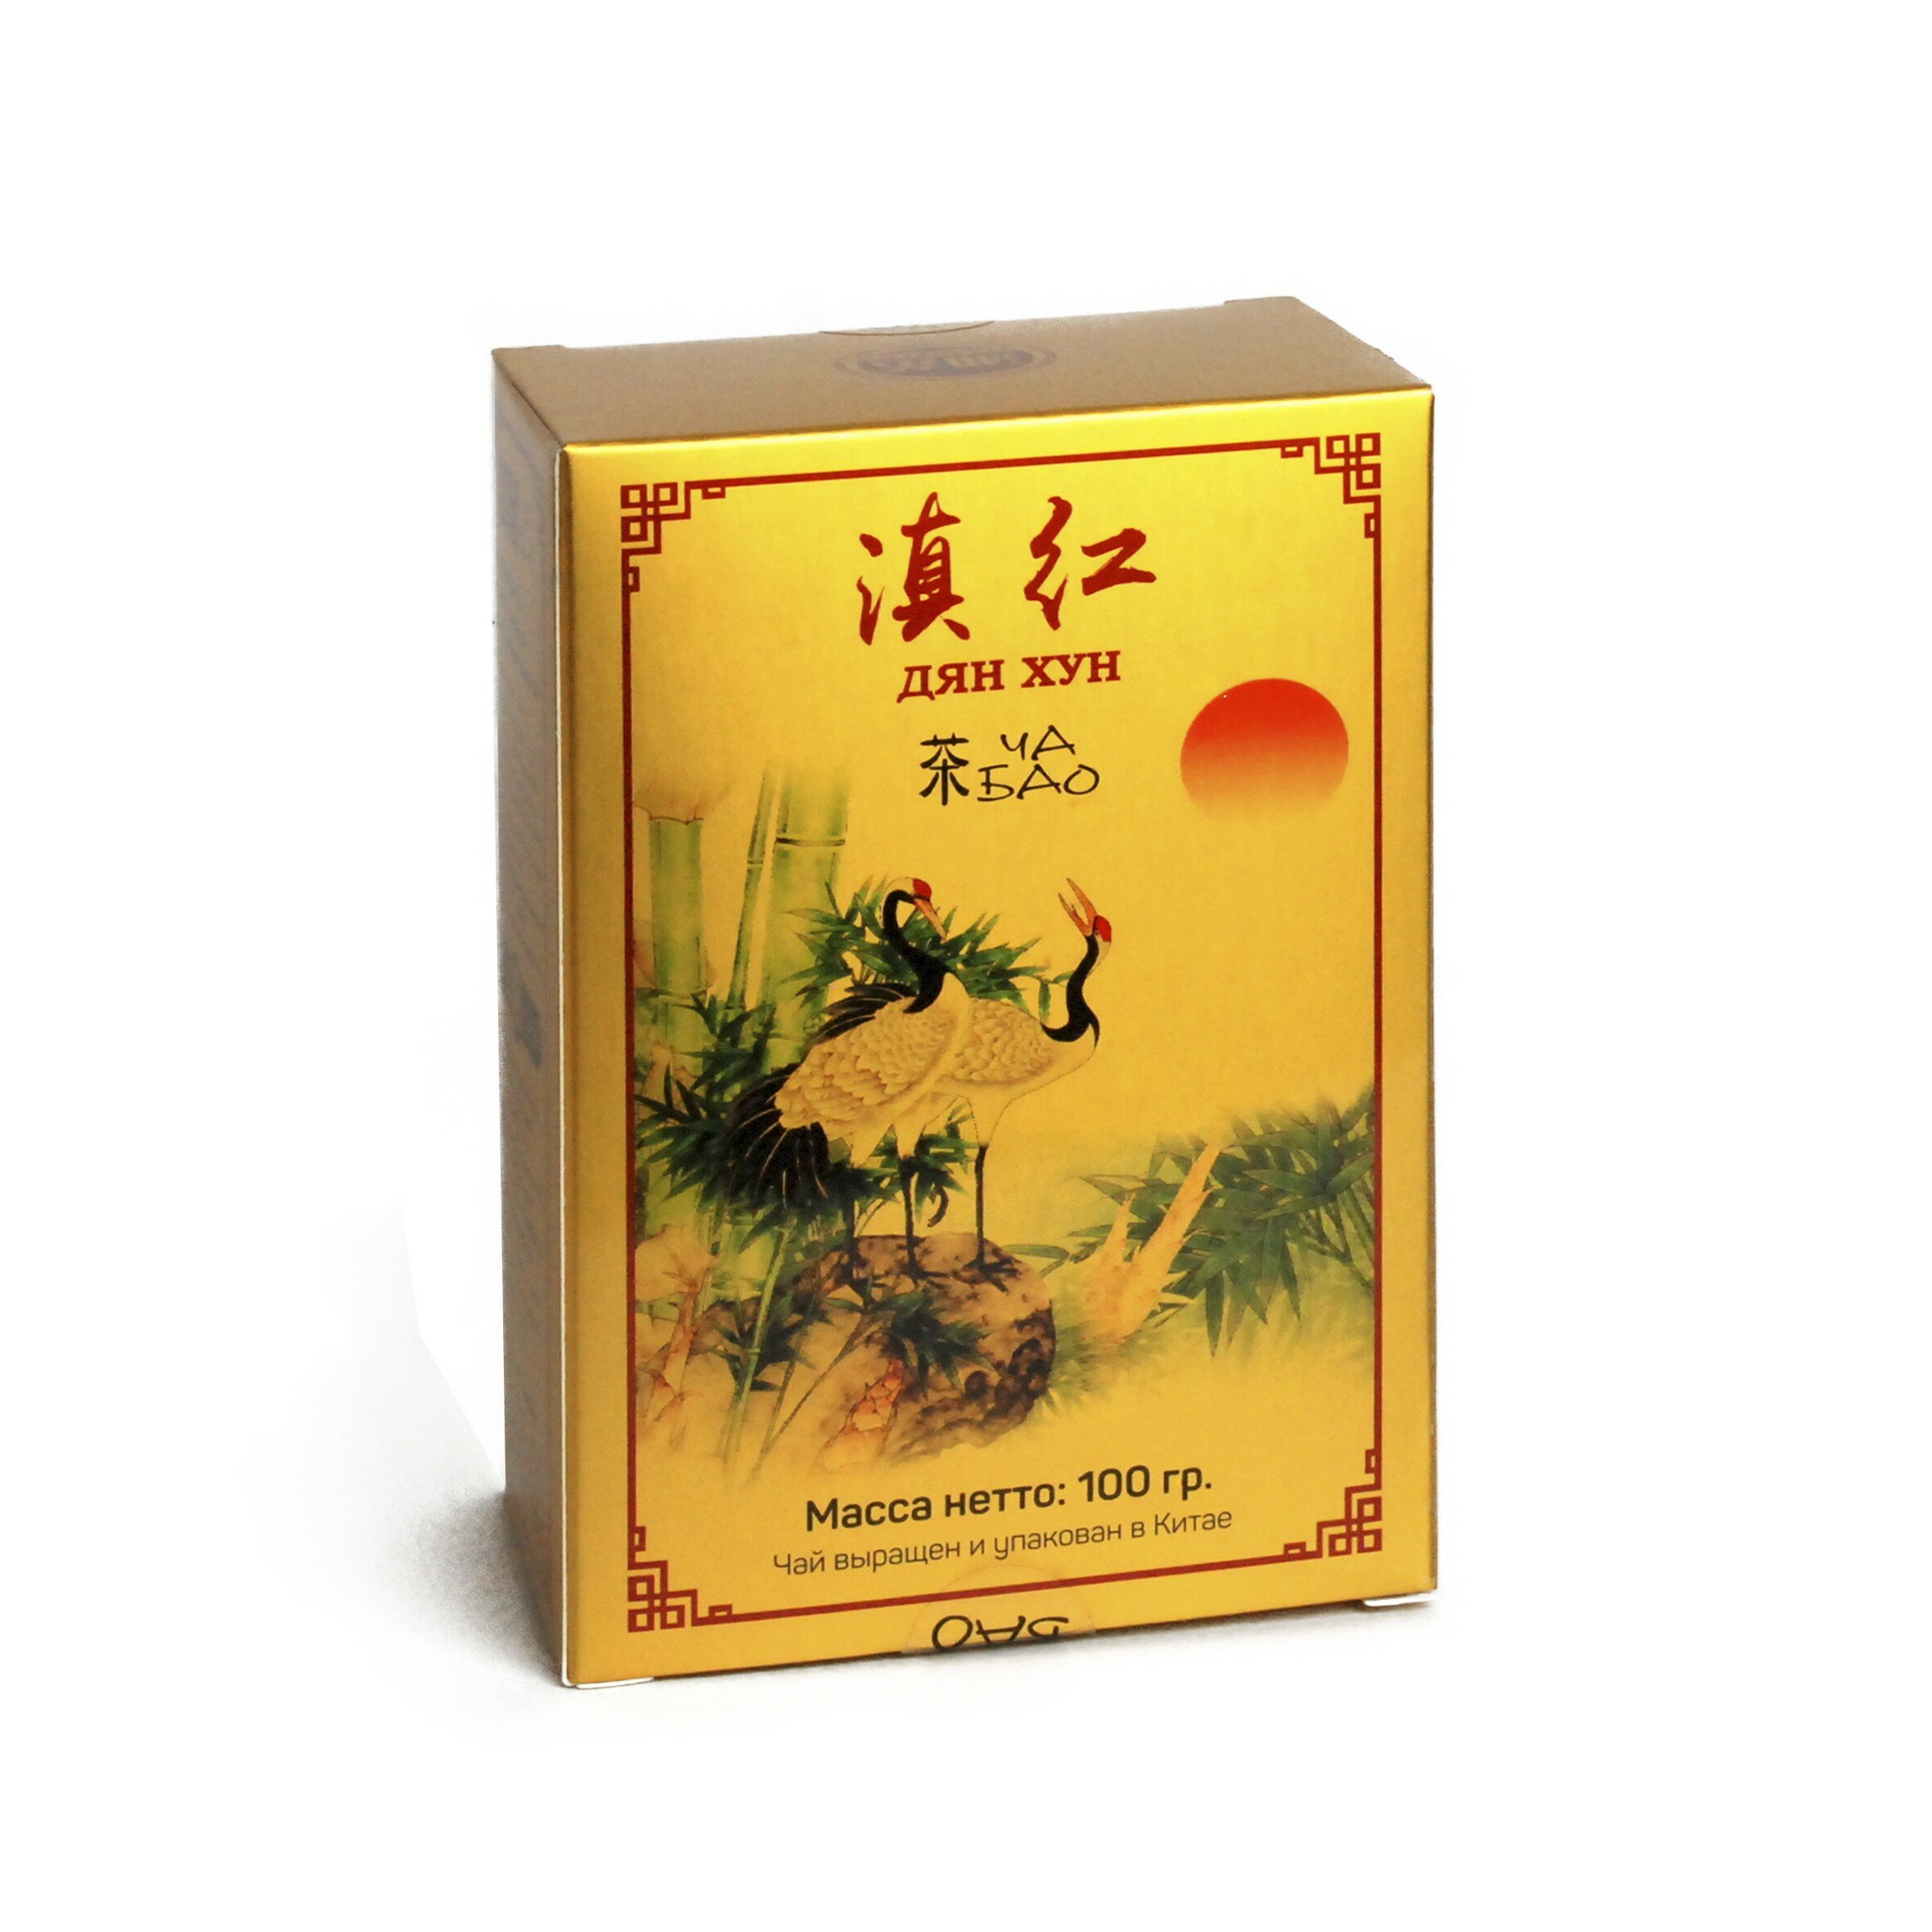 Чай чёрный ТМ "Ча Бао" - Дянь Хун, картон (375), листовой, Китай, 100 гр. - фотография № 5